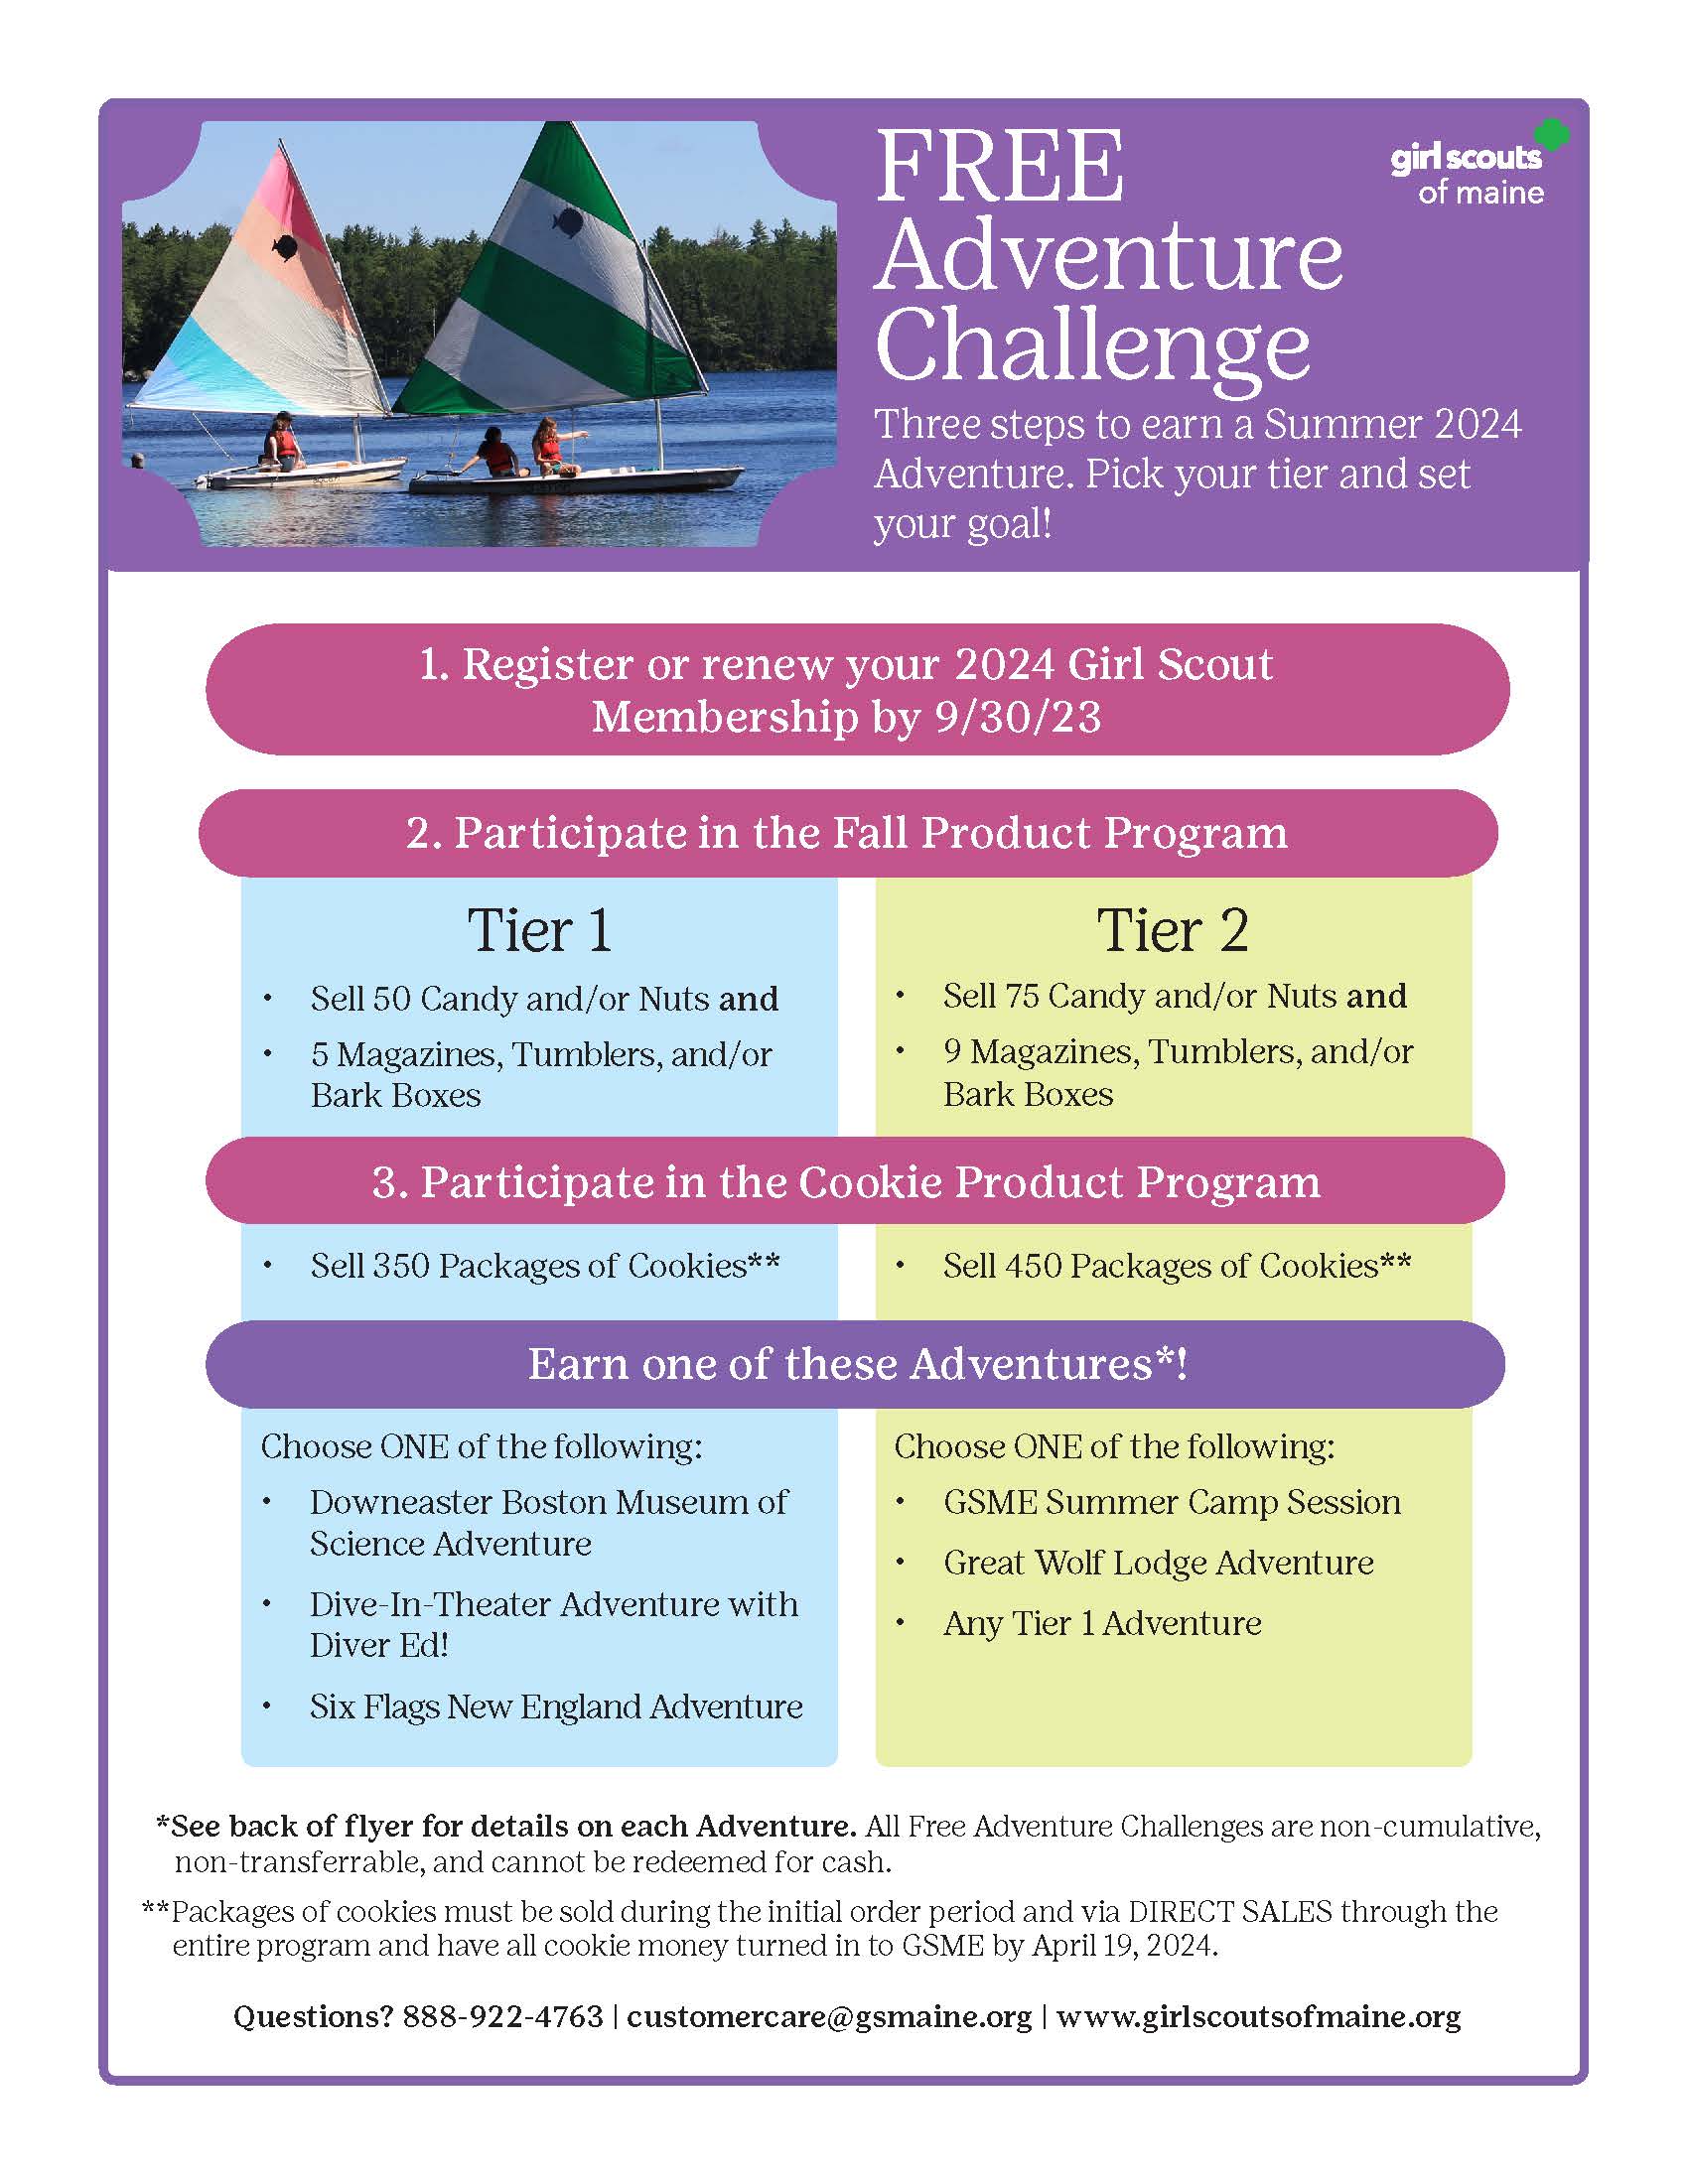 Free Adventure Challenge flyer showing girls sailing